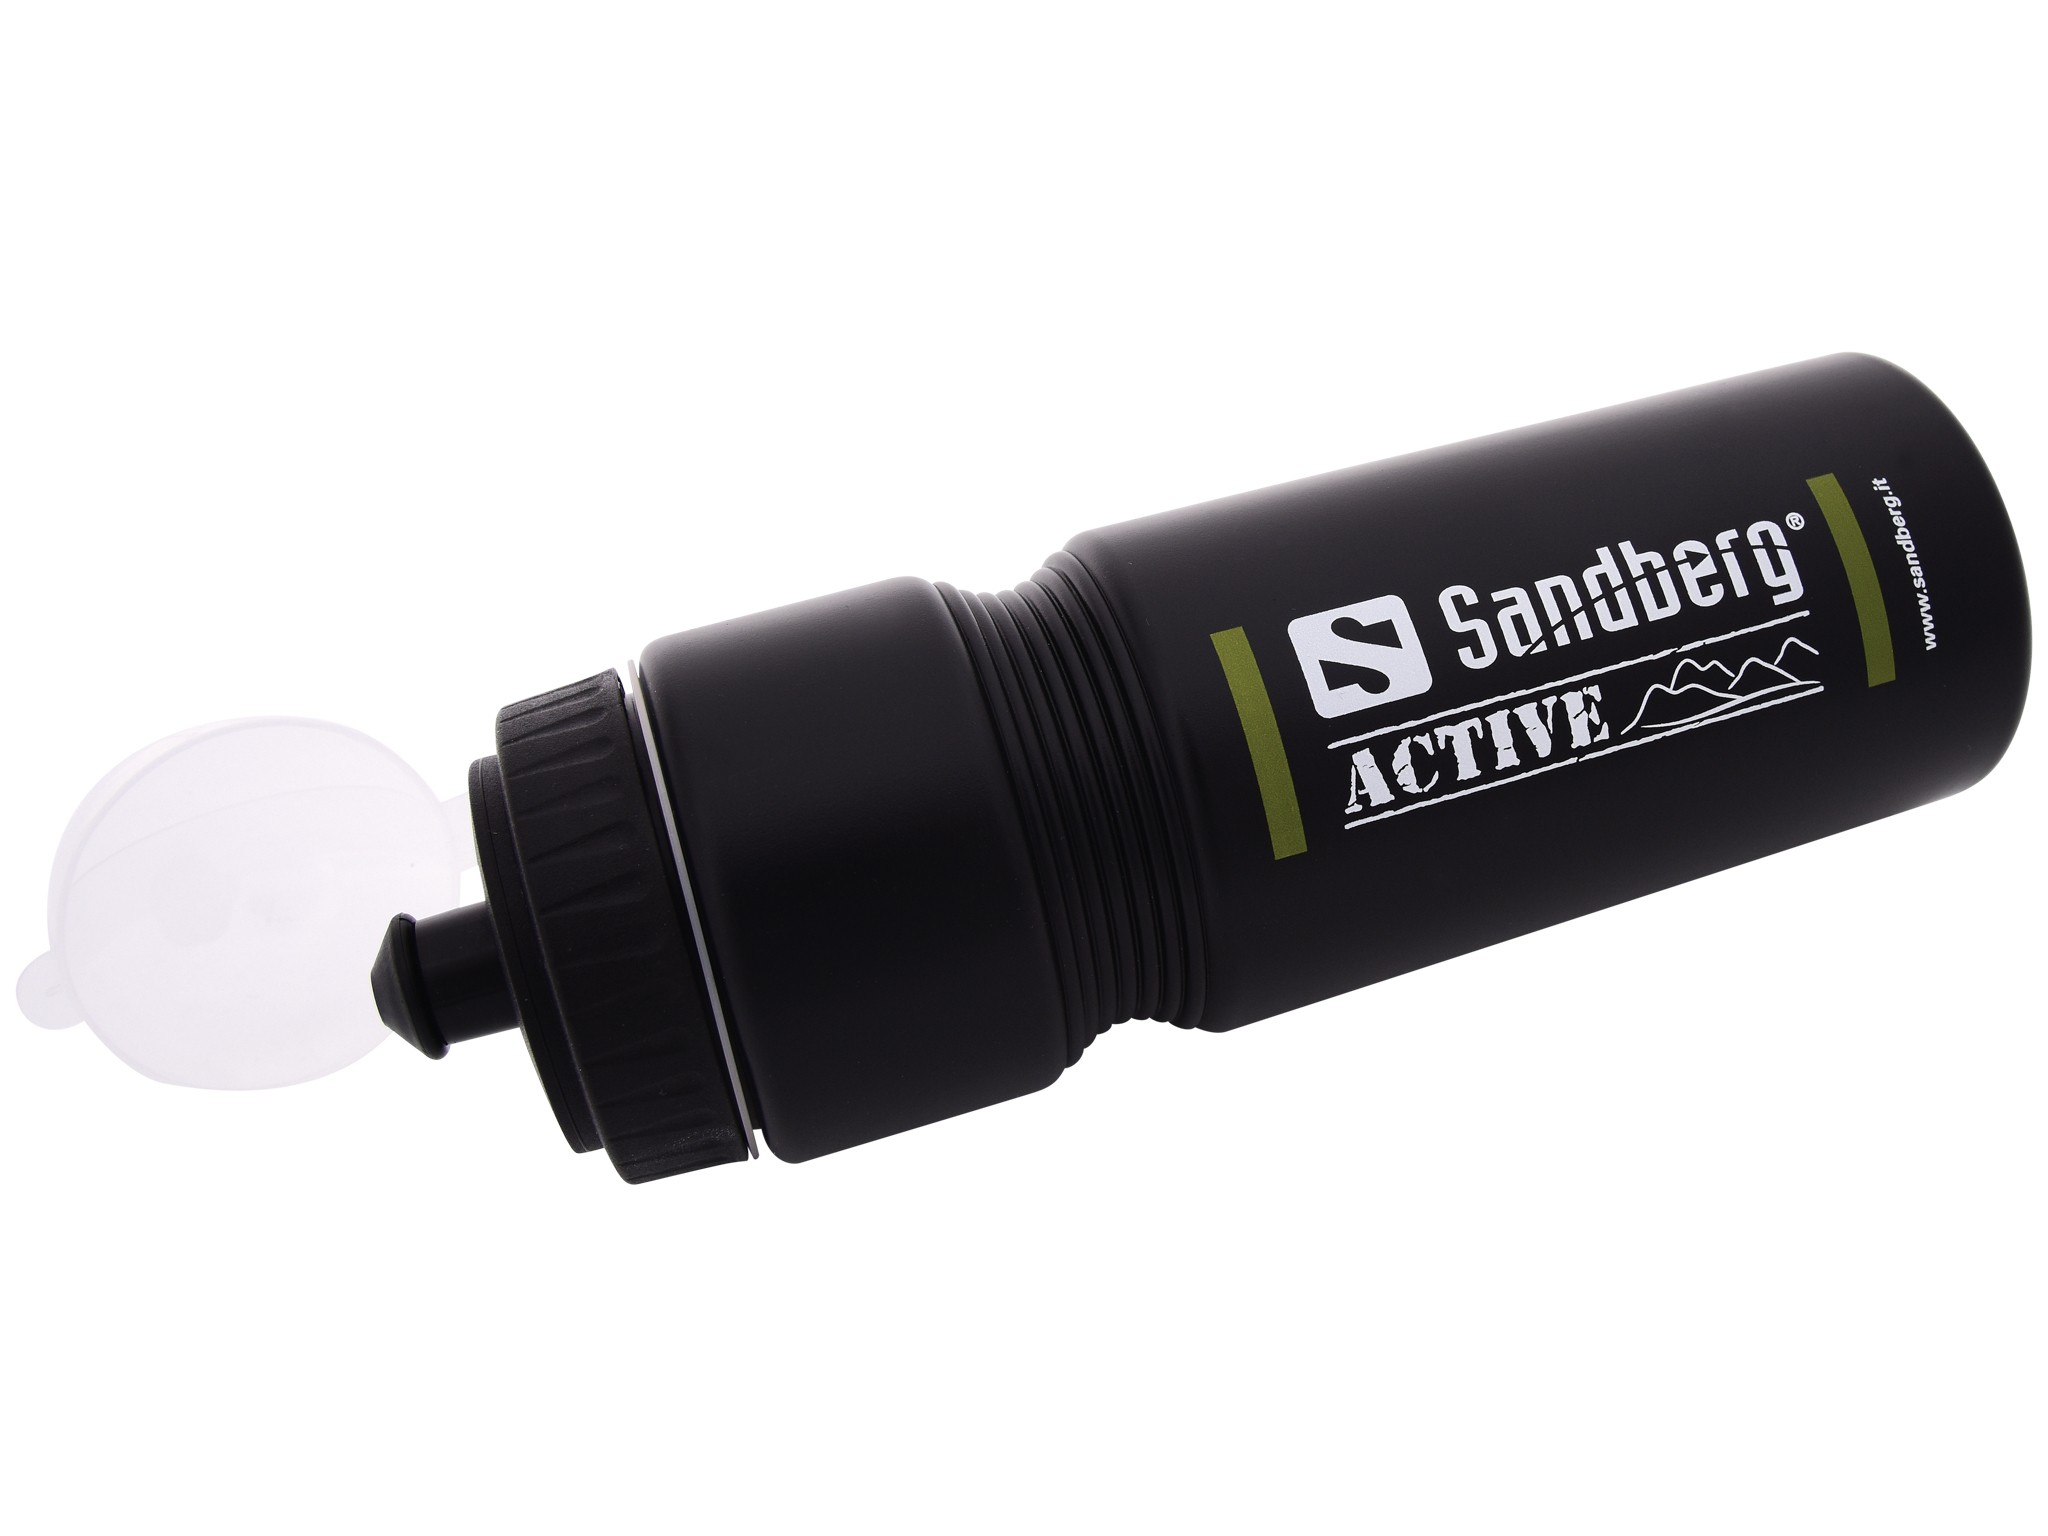 Sandberg Active Sports Drinking Bottle - 999-29